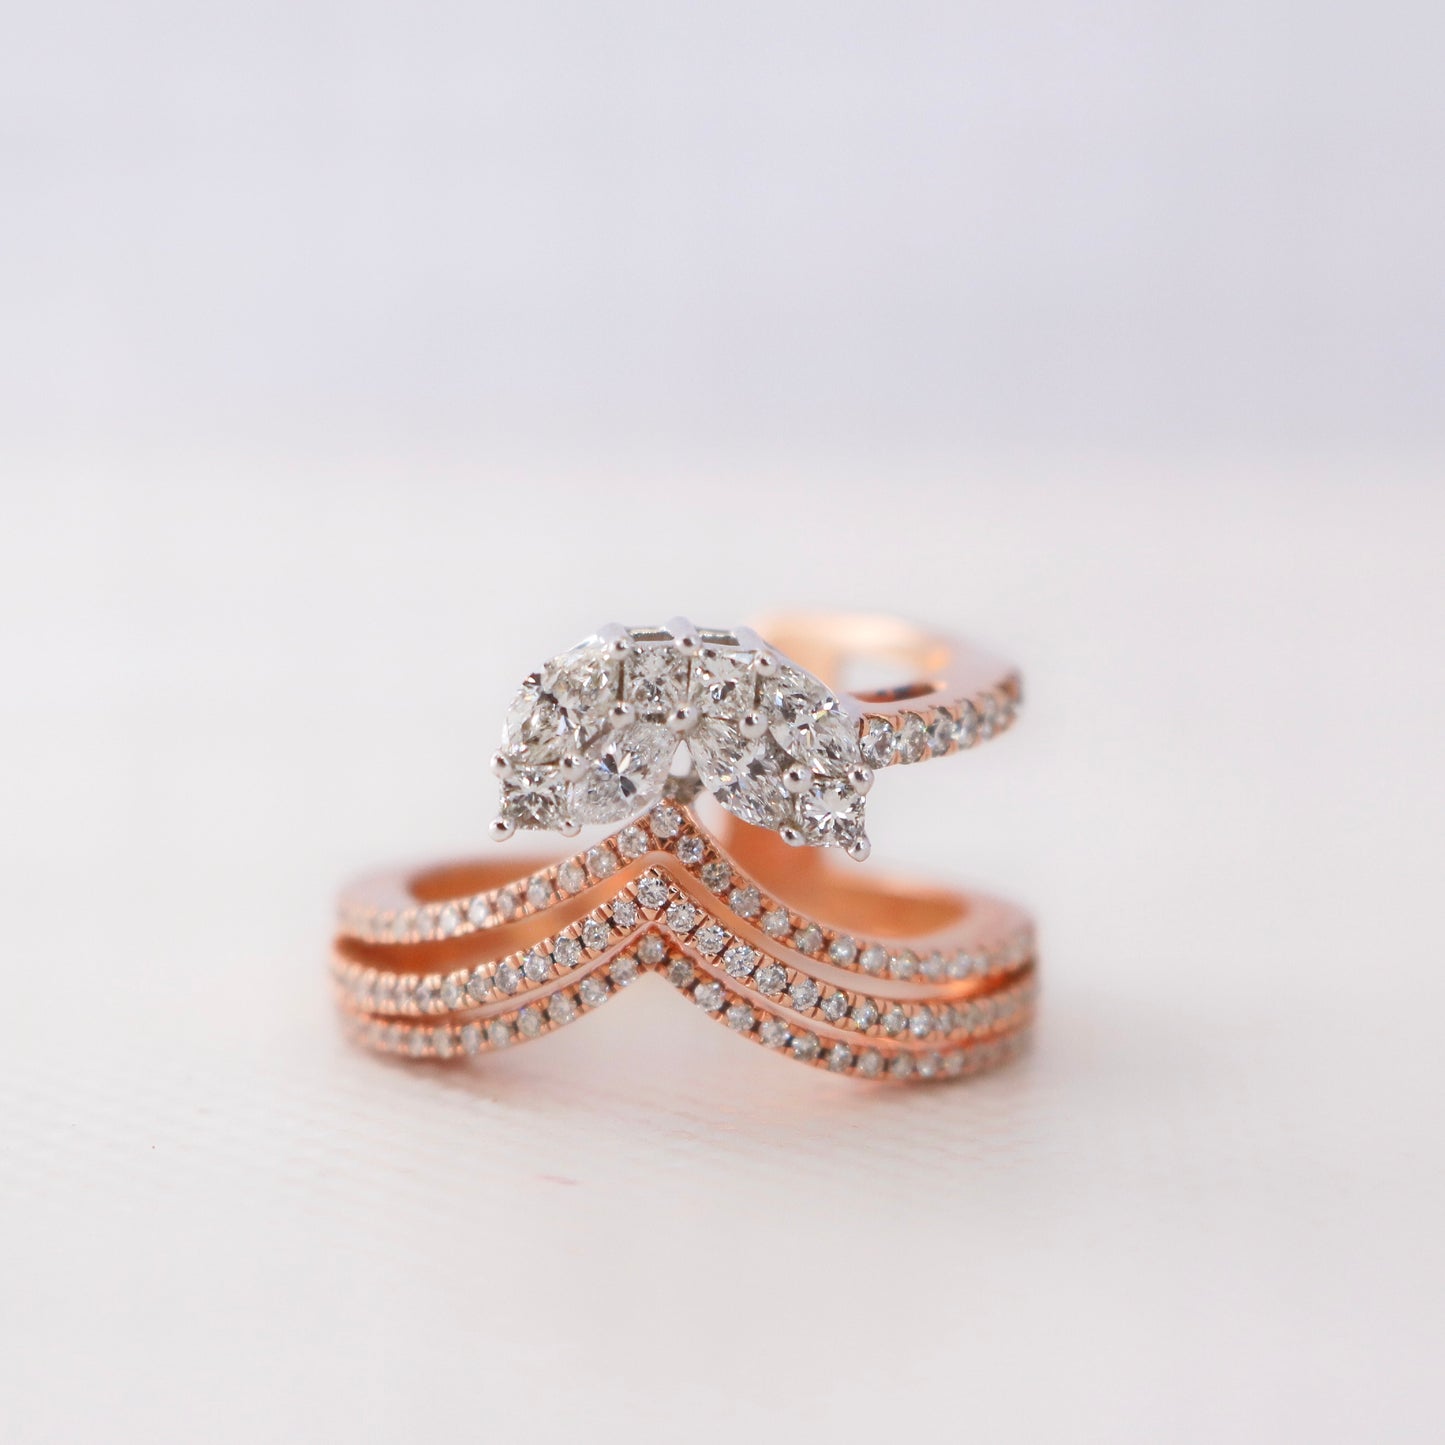 Neary diamond ring for women